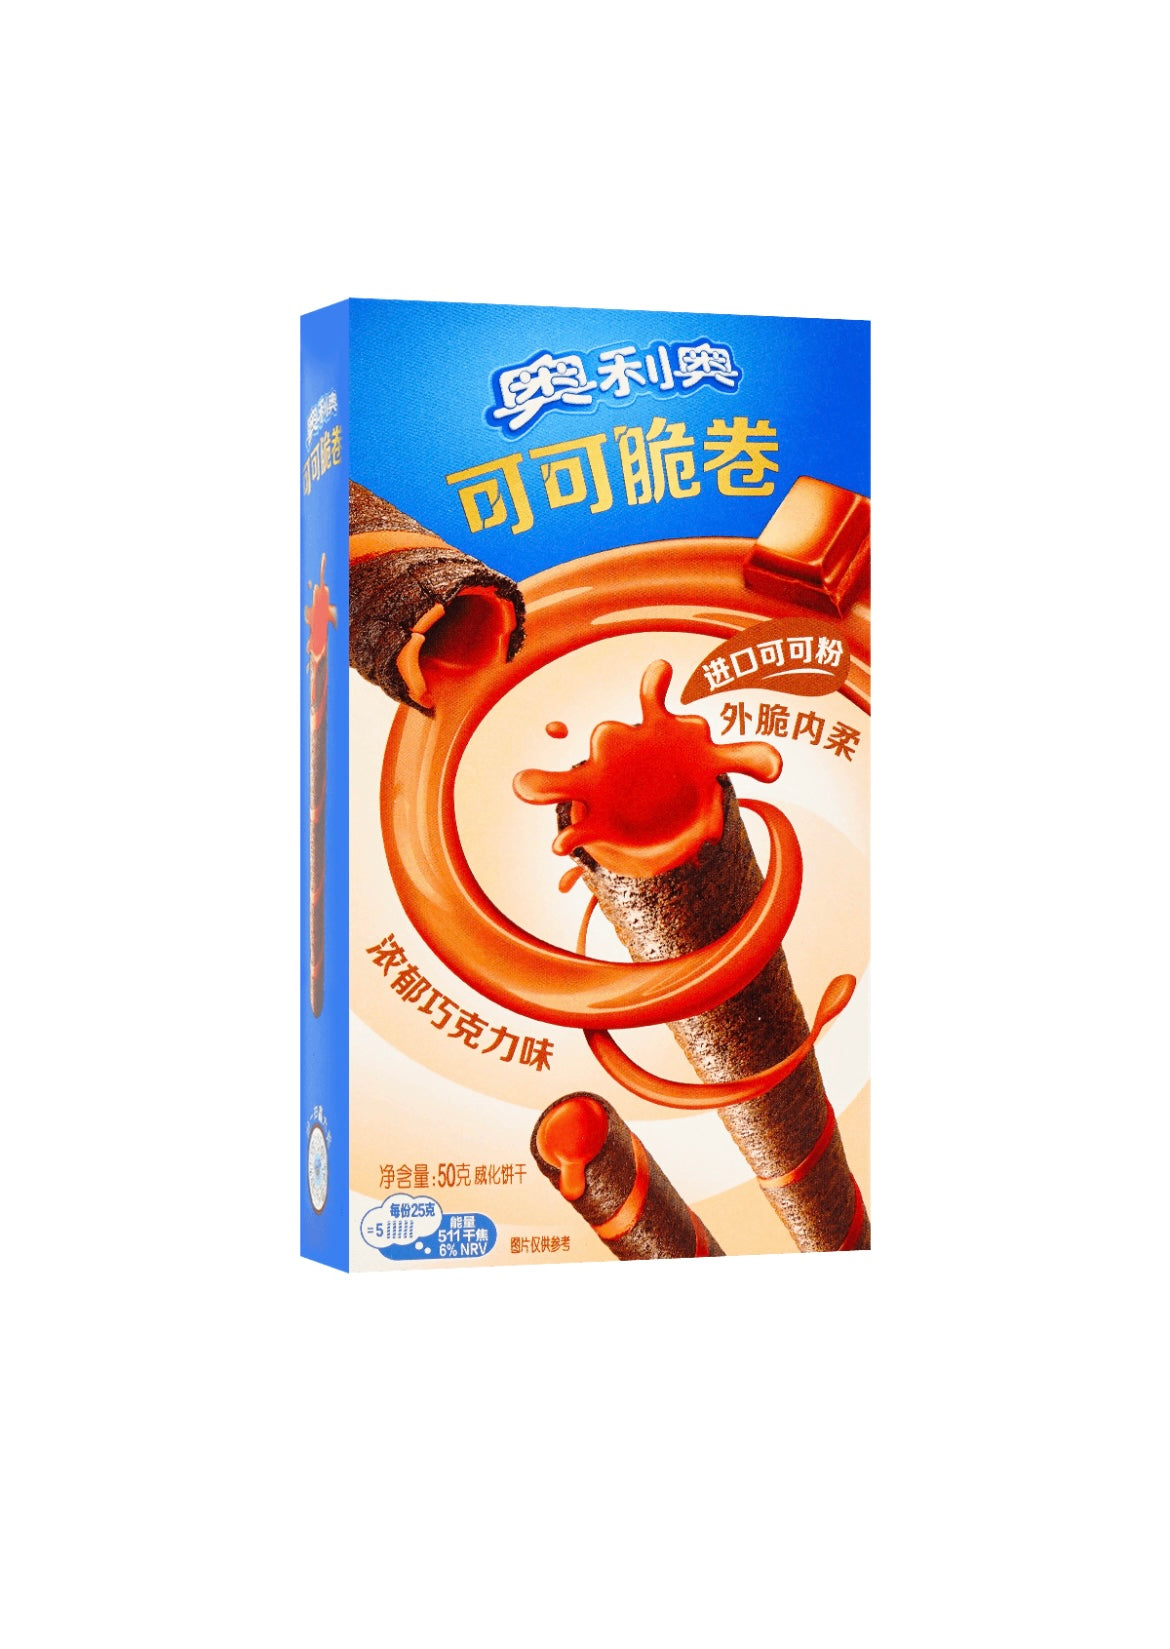 Oreo Chocolate Wafer Rolls (China)